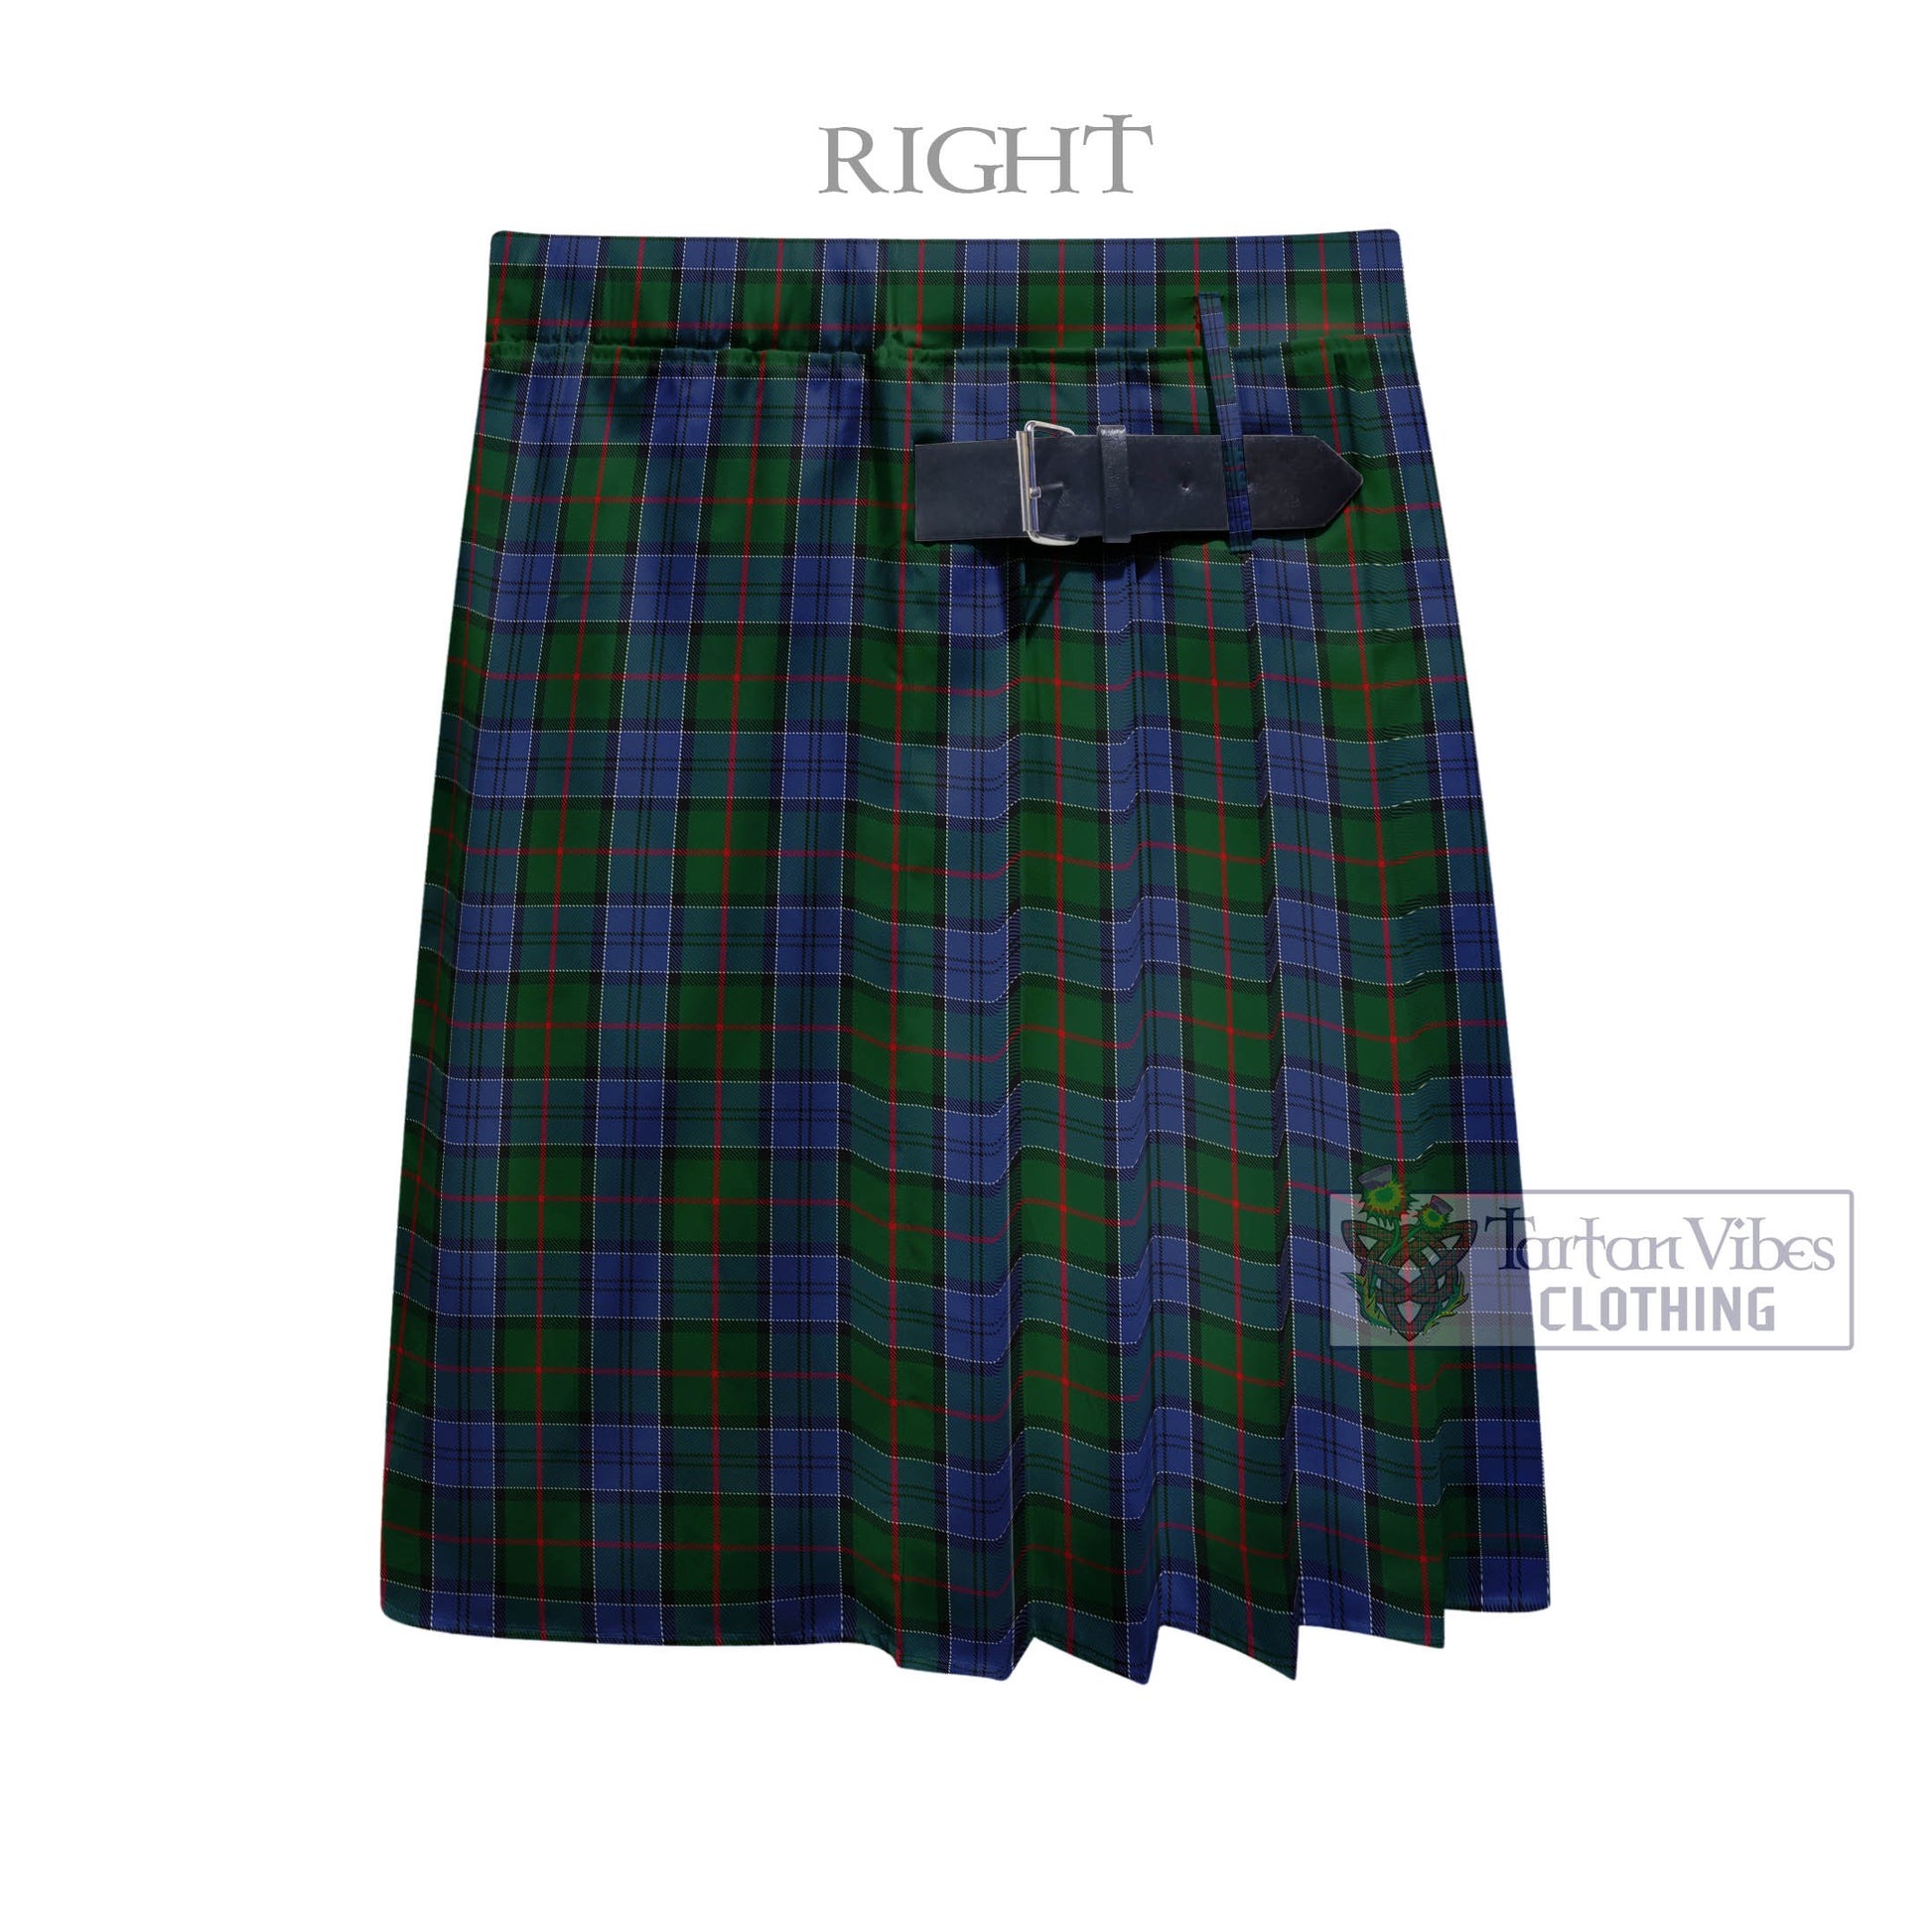 Tartan Vibes Clothing Colquhoun Tartan Men's Pleated Skirt - Fashion Casual Retro Scottish Style